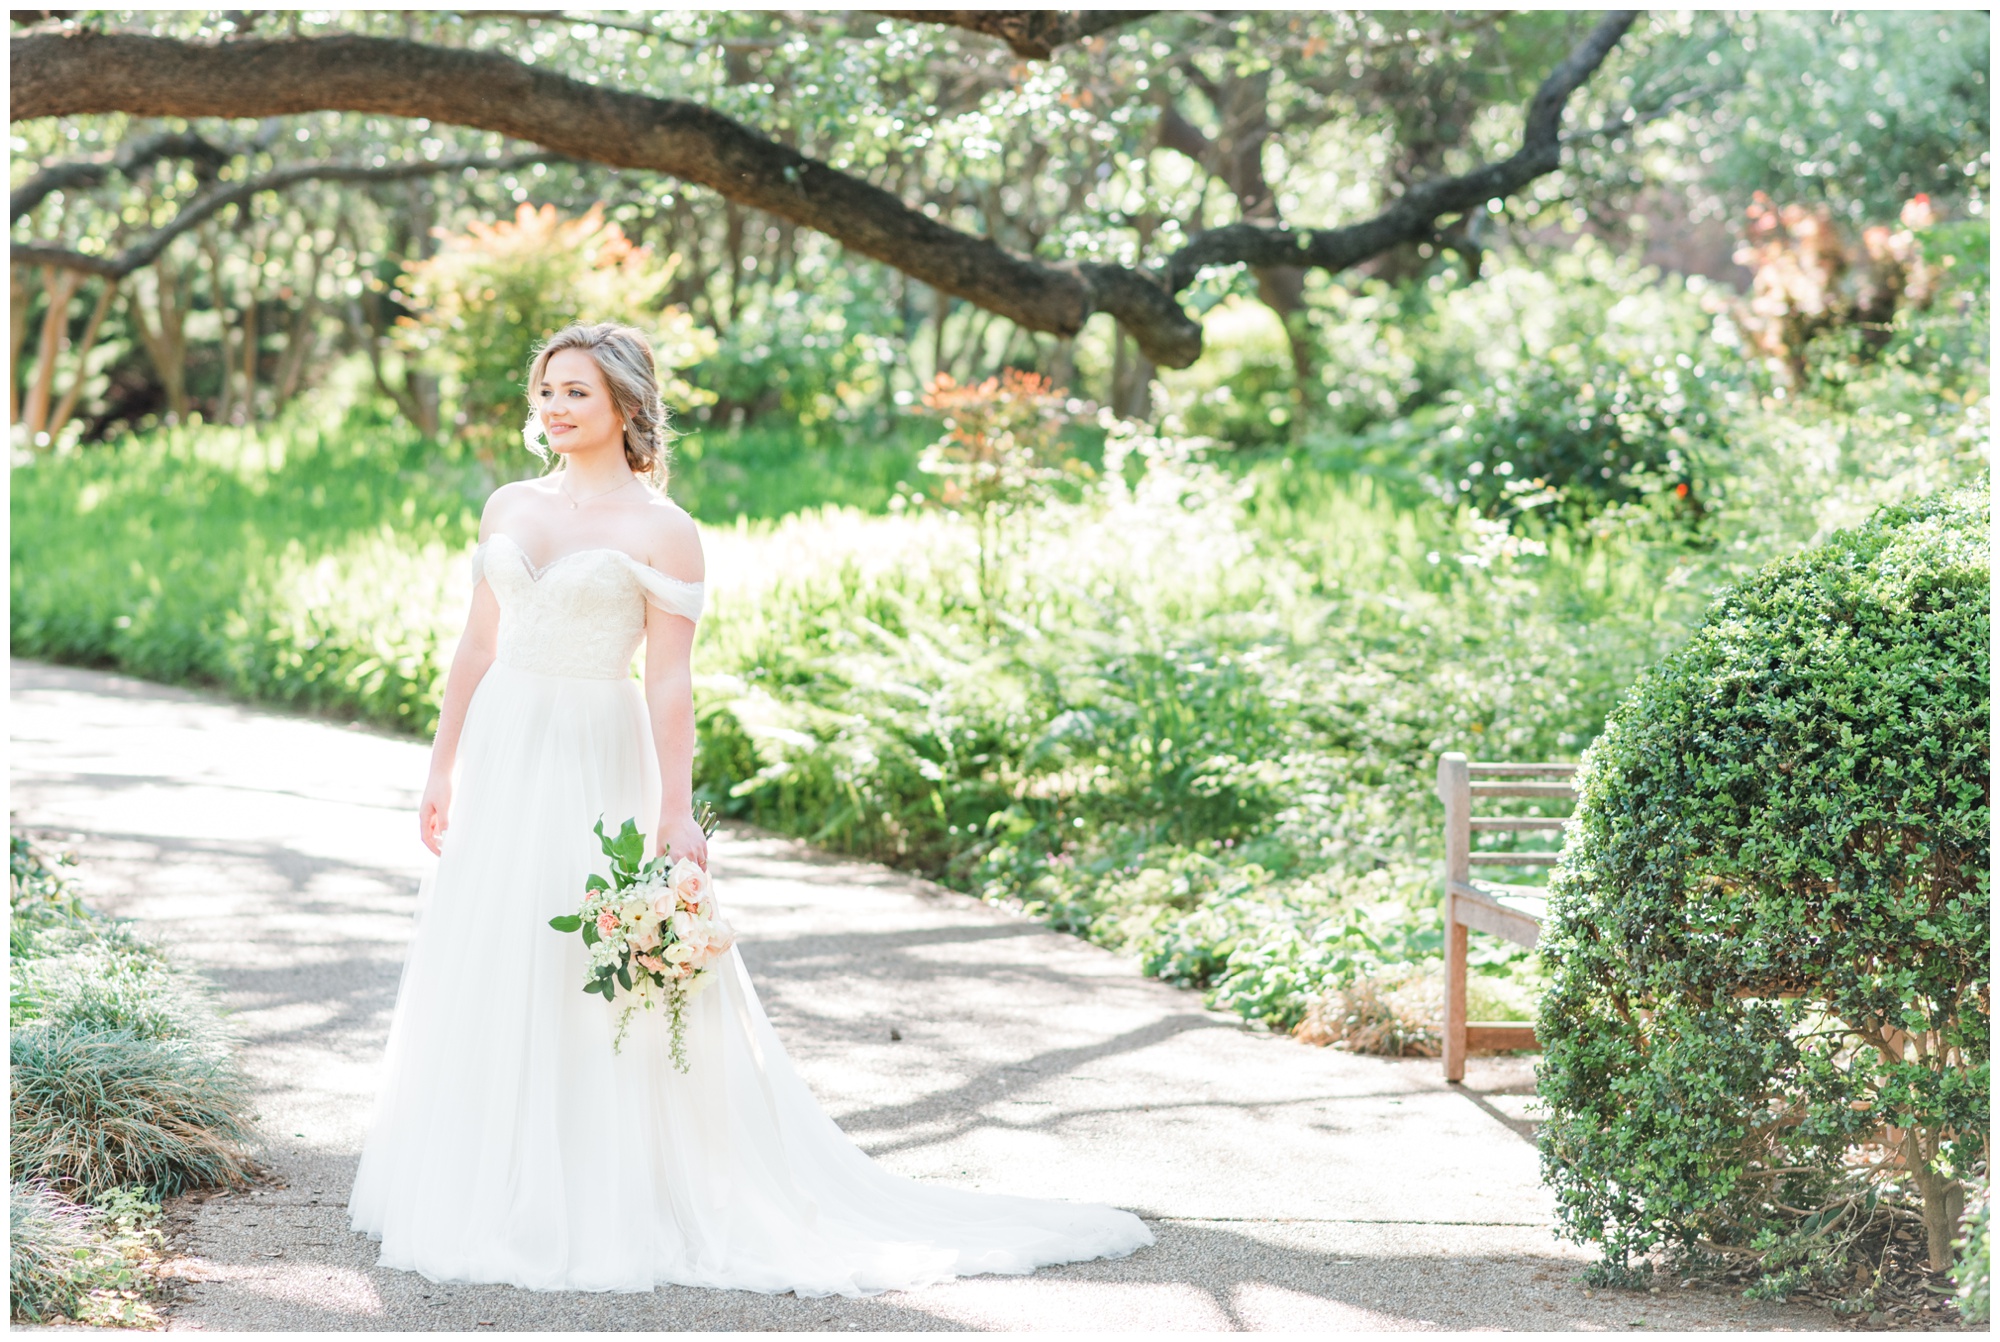 Fort Worth Botanic Garden Bridal Session | Fort Worth Botanic Garden | Fort Worth Bridal Session | Fort Worth Bridal Photographer | Lauren Grimes Photography